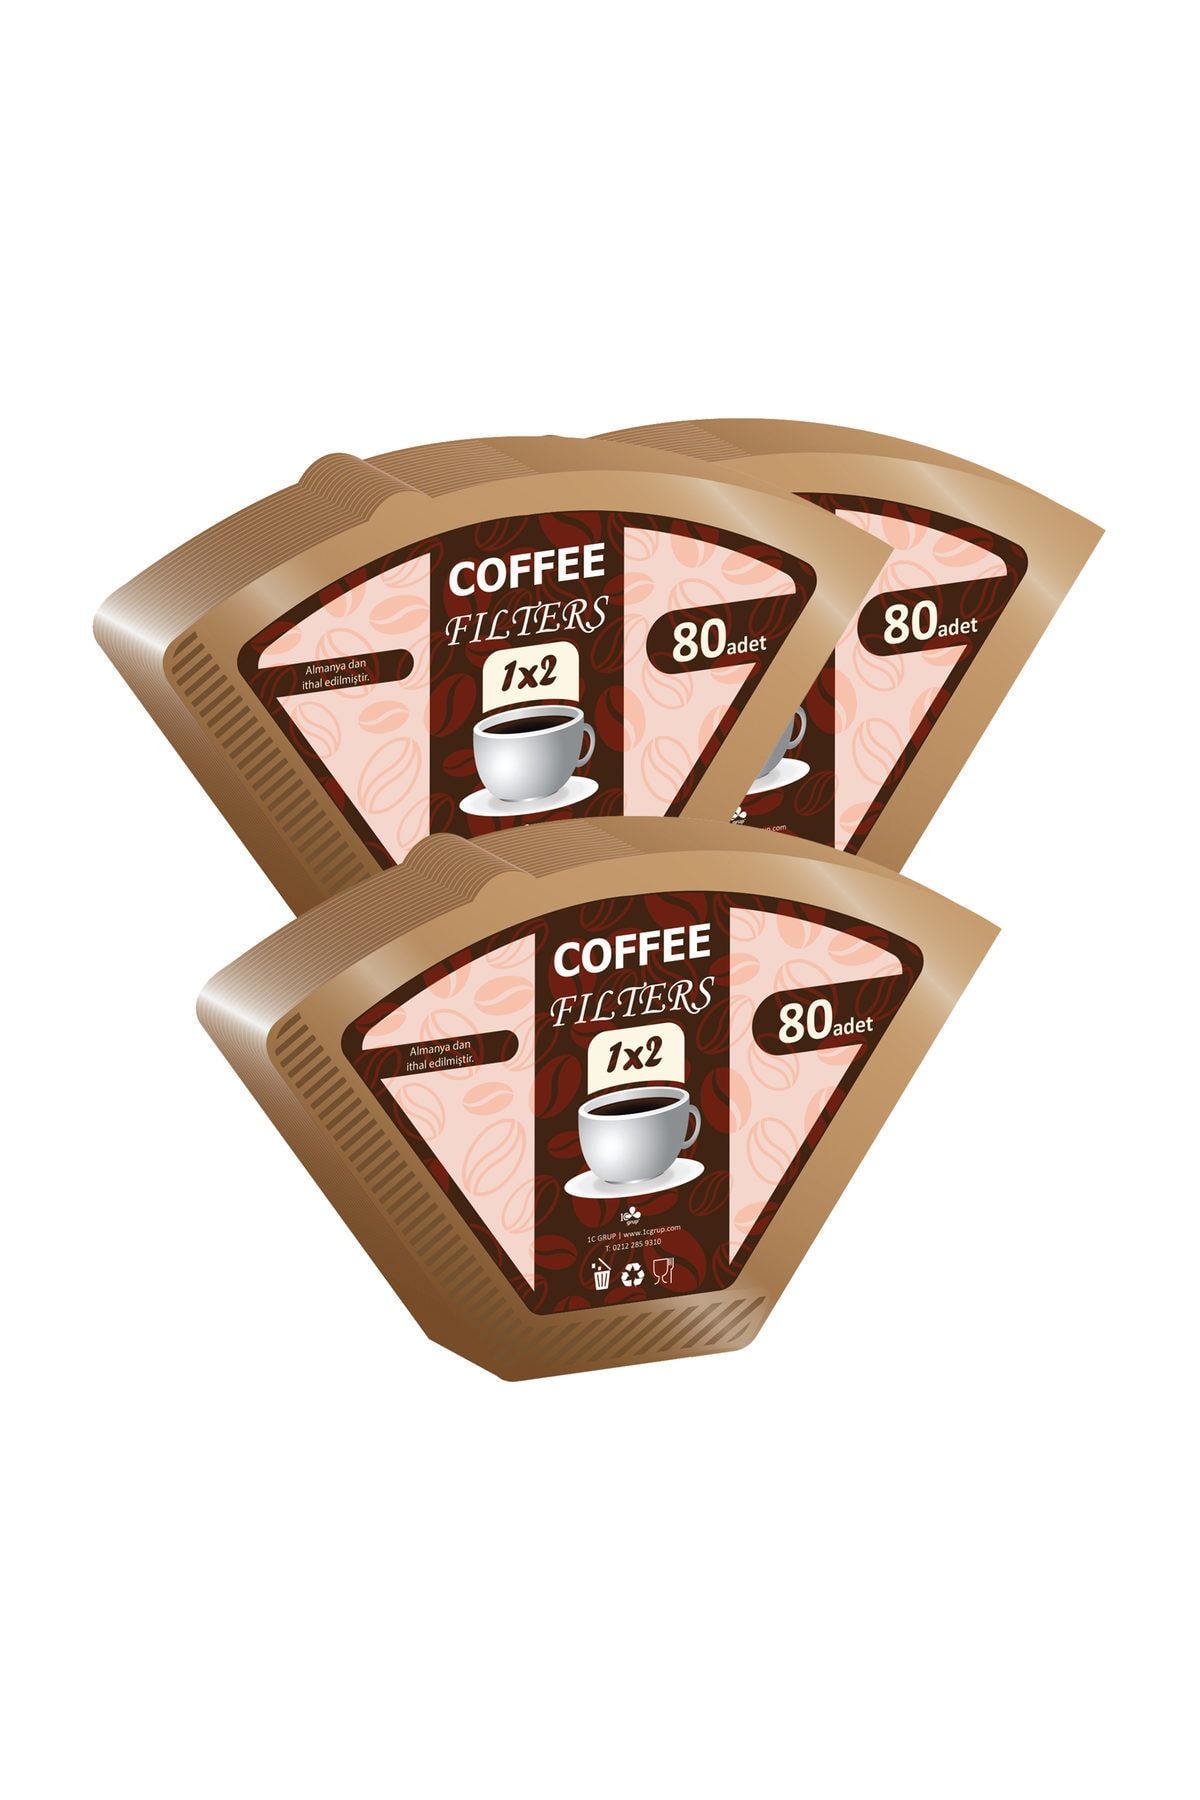 Universal Coffee Filters Kahve Filtre Kağıdı 1x2 80'li 3 Paket 240 Adet Brown